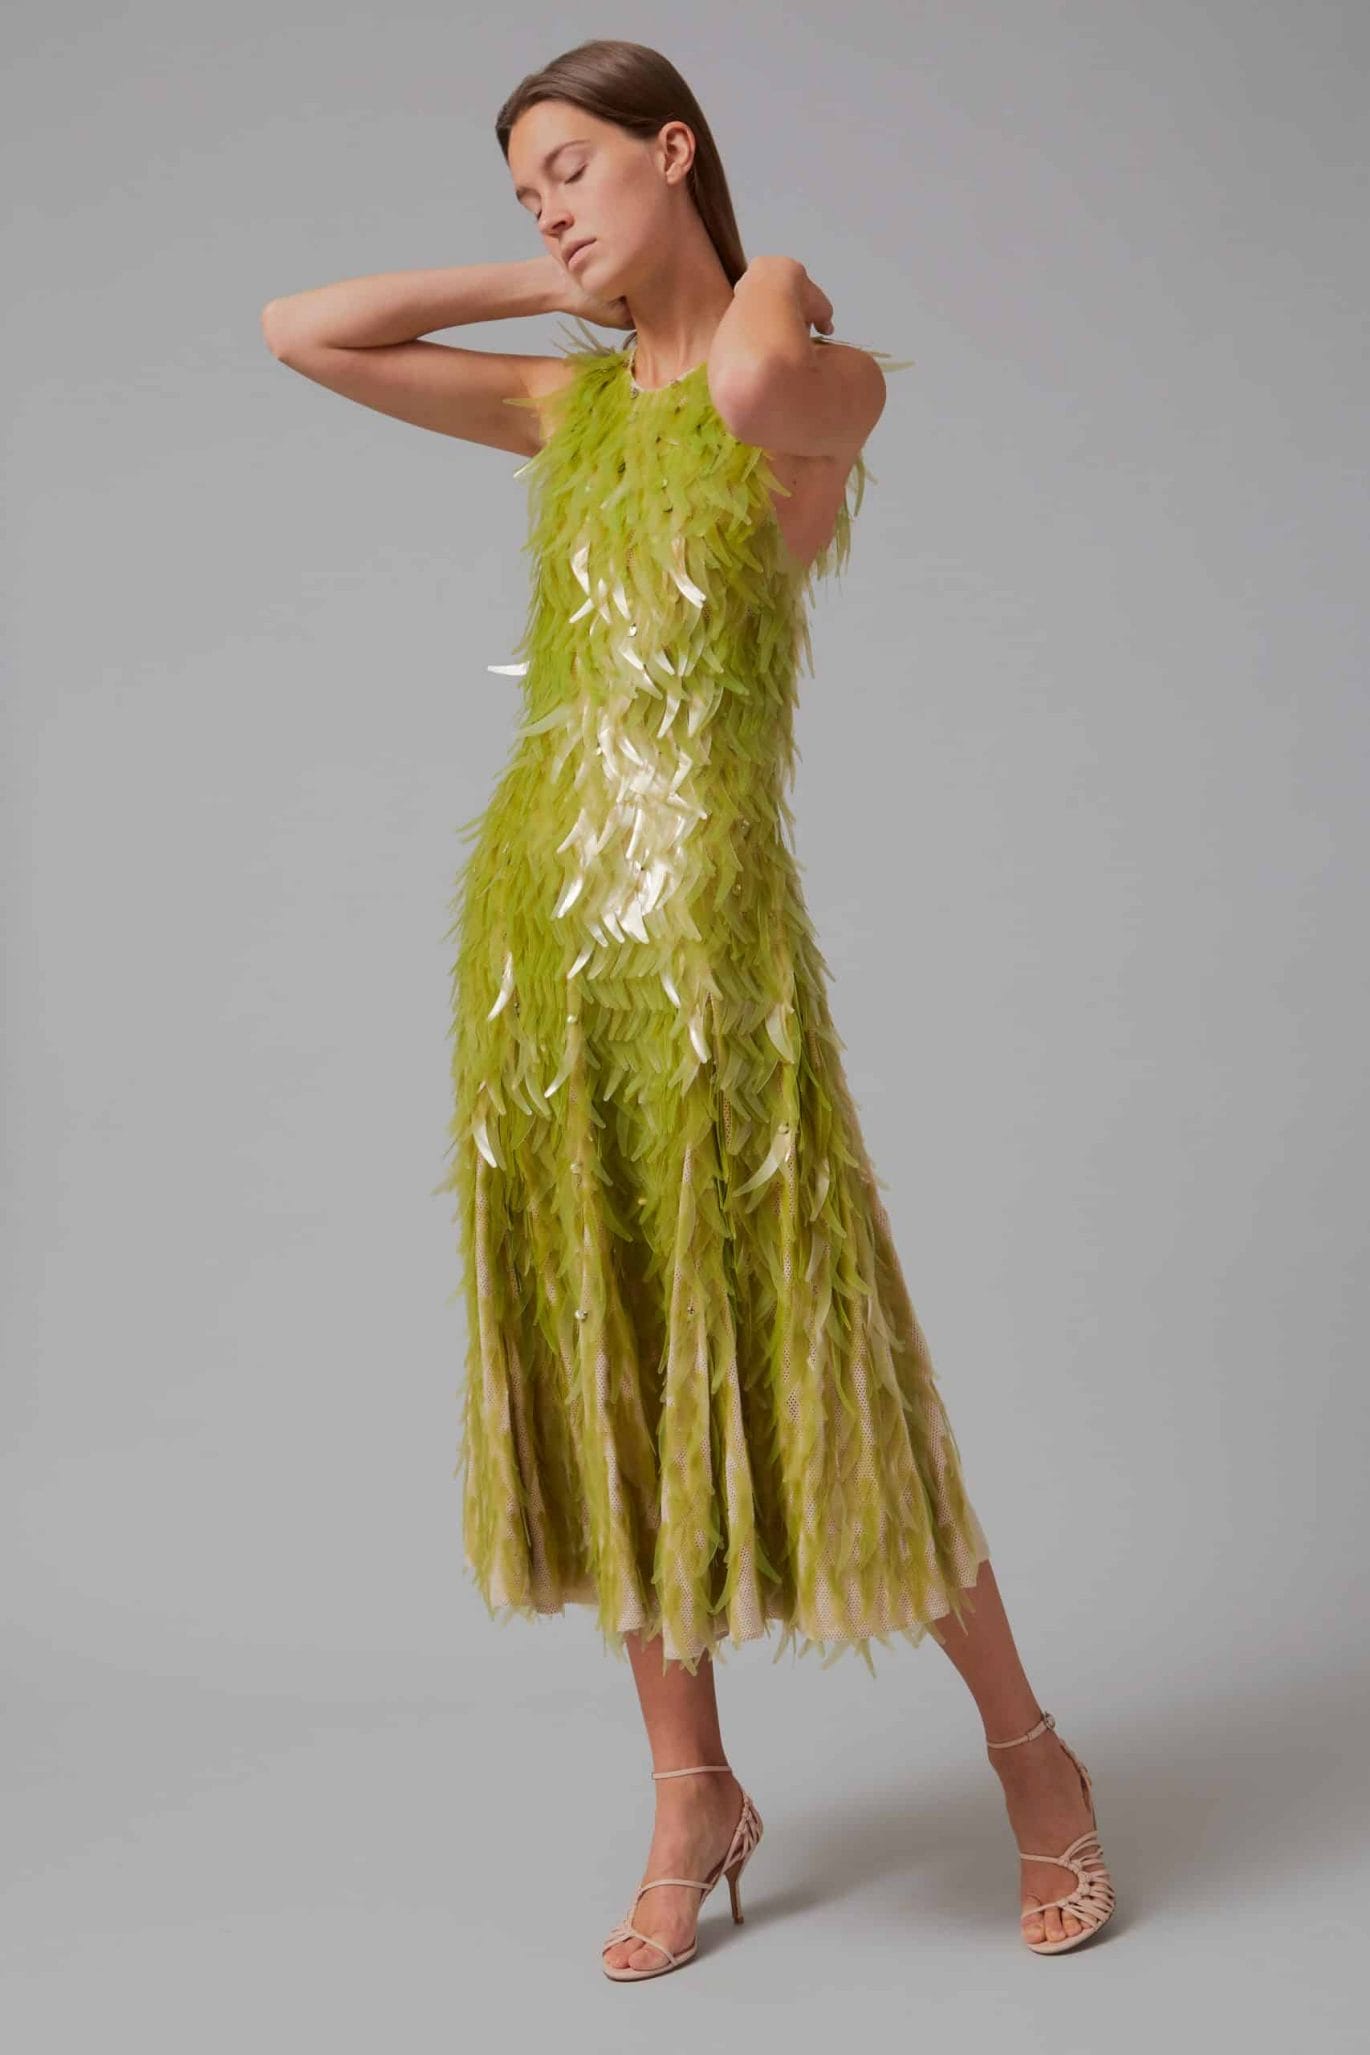 Phillip Lim en Charlotte McCurdy maken jurk van algen